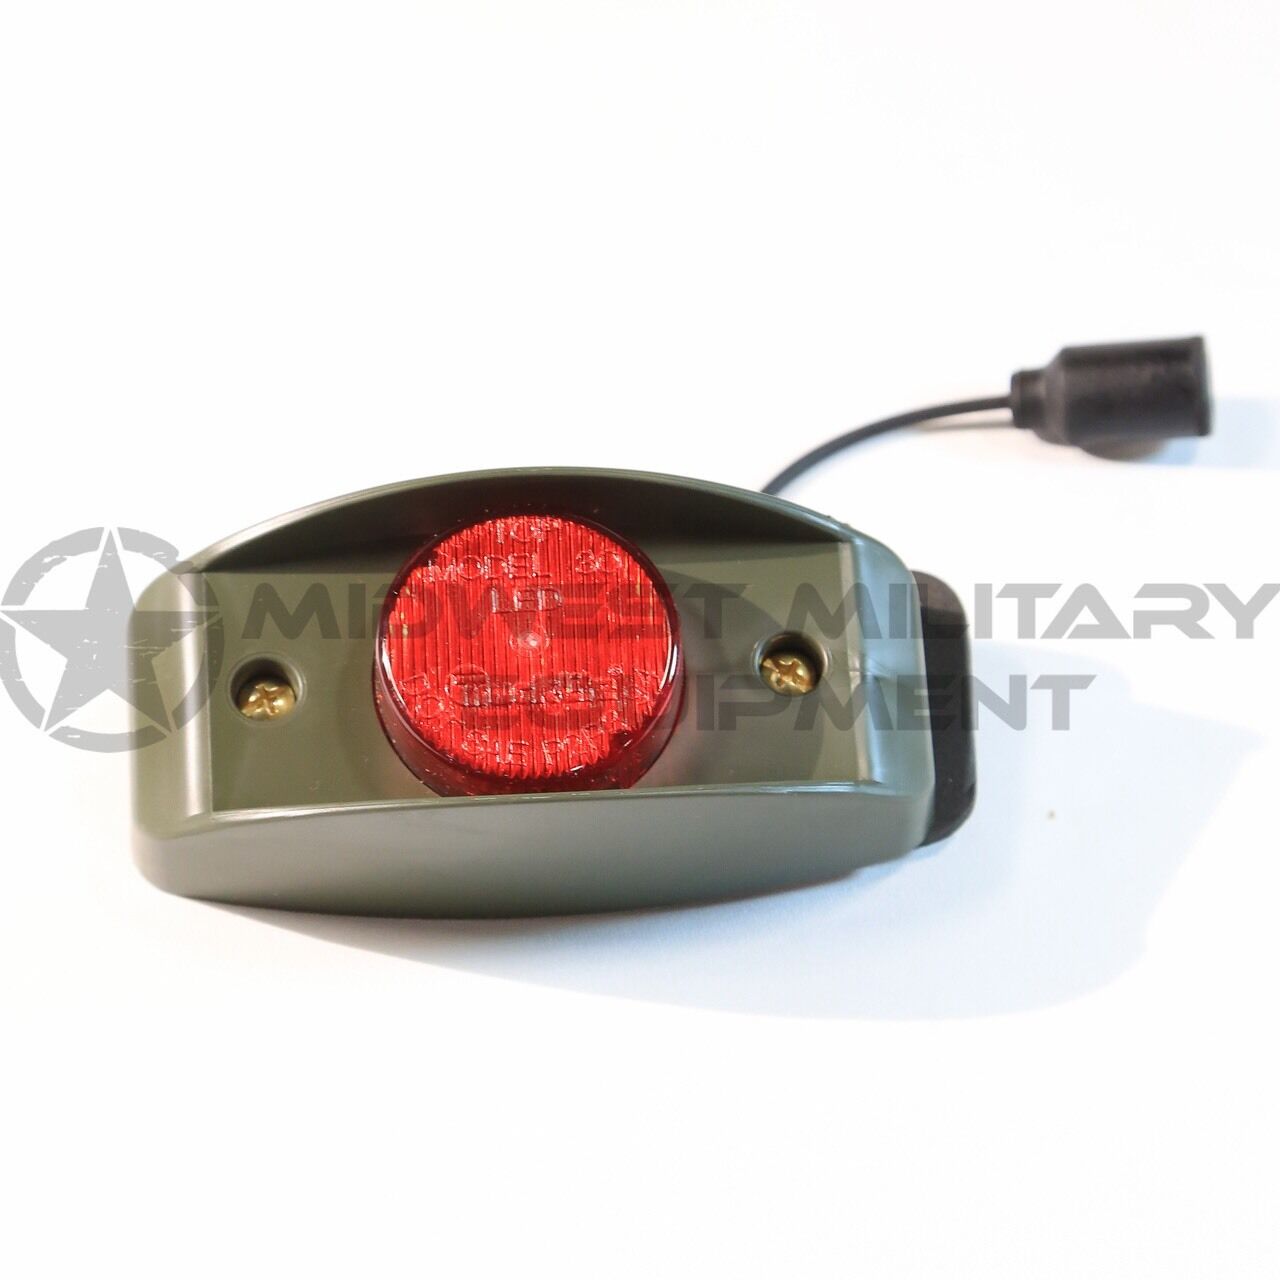 TRUCKLITE MILITARY RED GREEN LED Side Marker W/BUCKET h1 Hummer humvee 